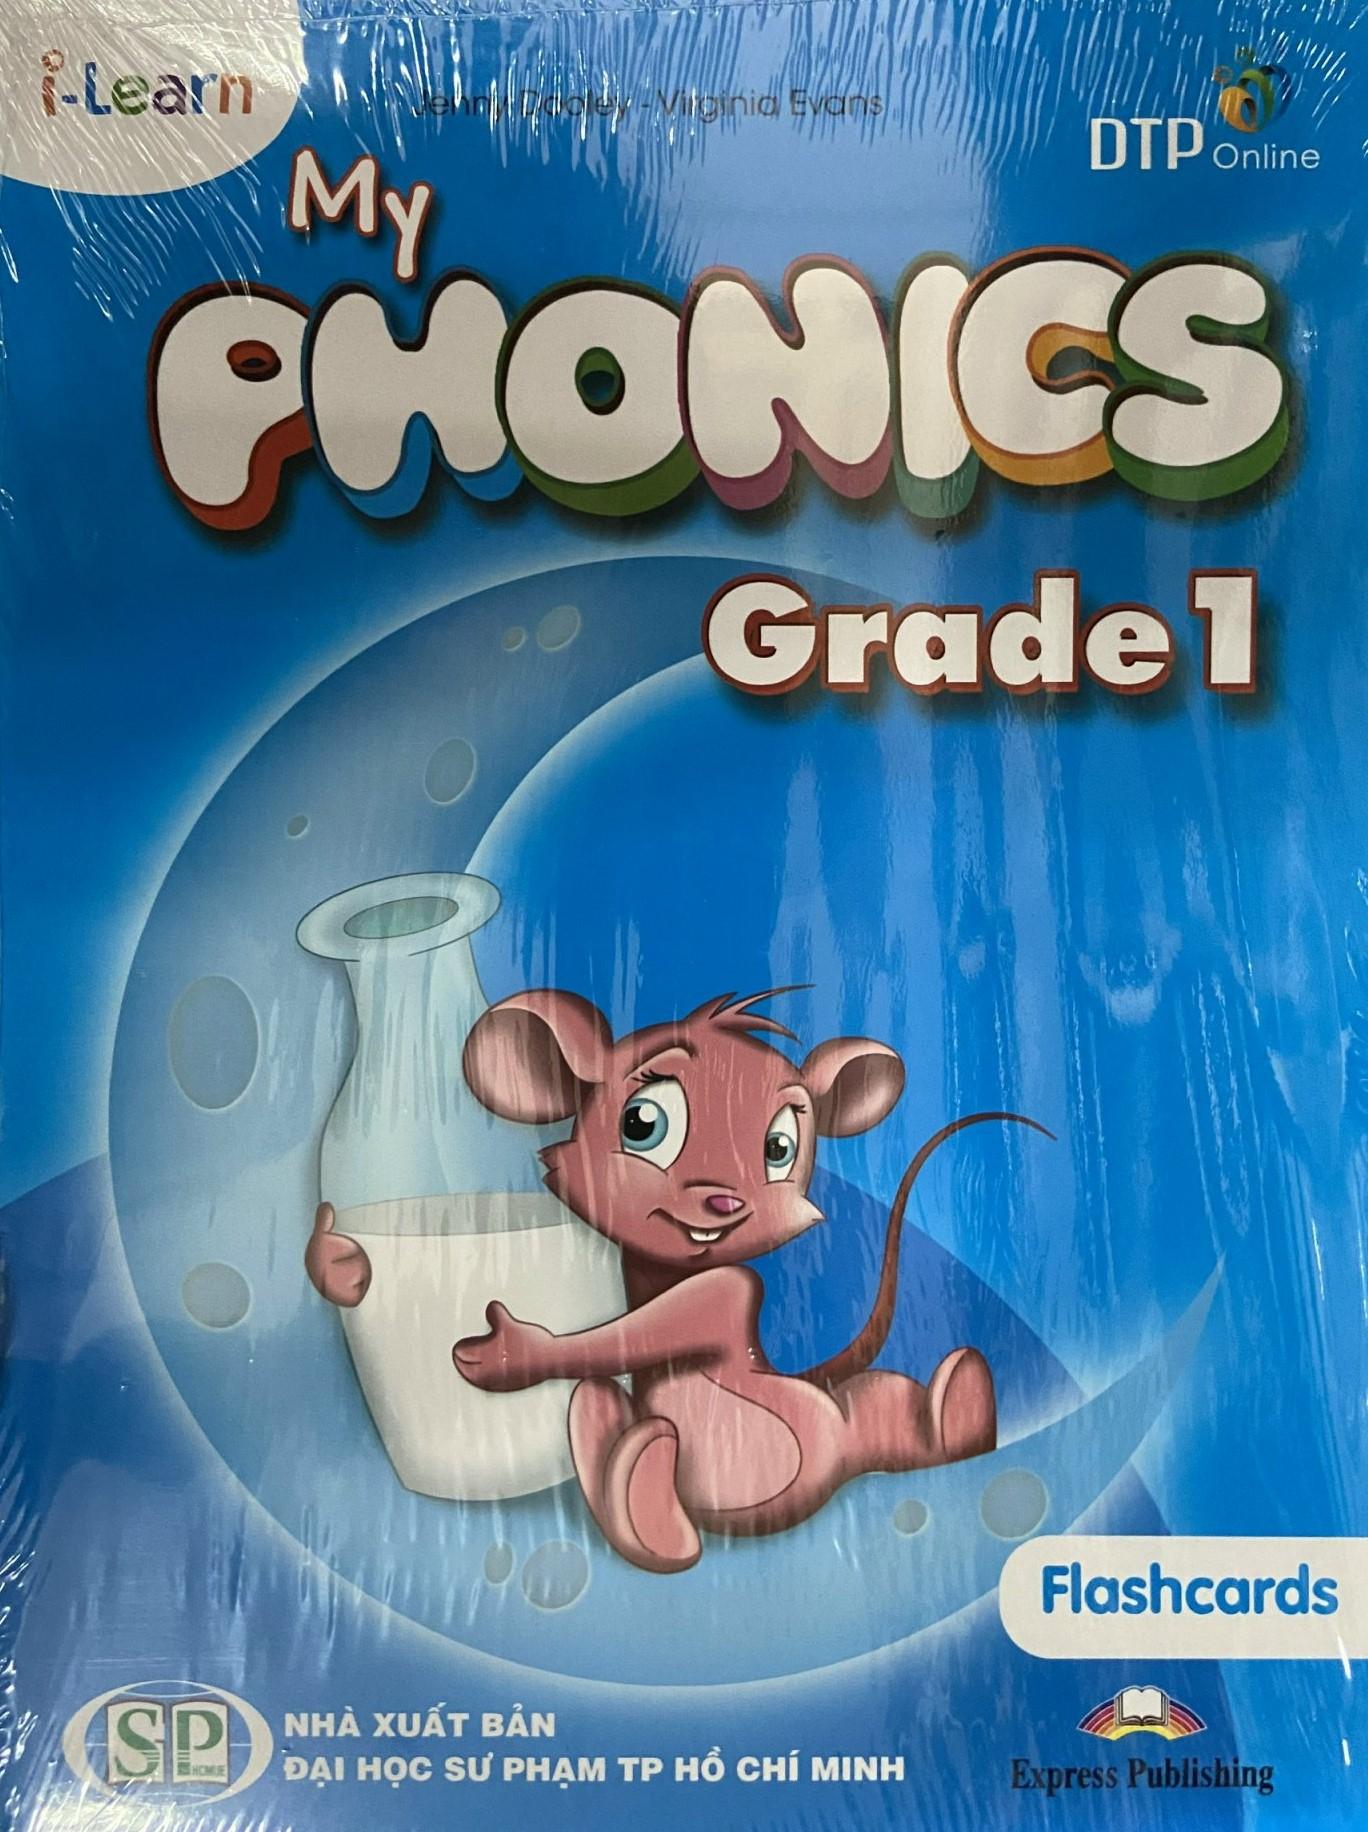 i-Learn My Phonics Grade 1 Flashcards